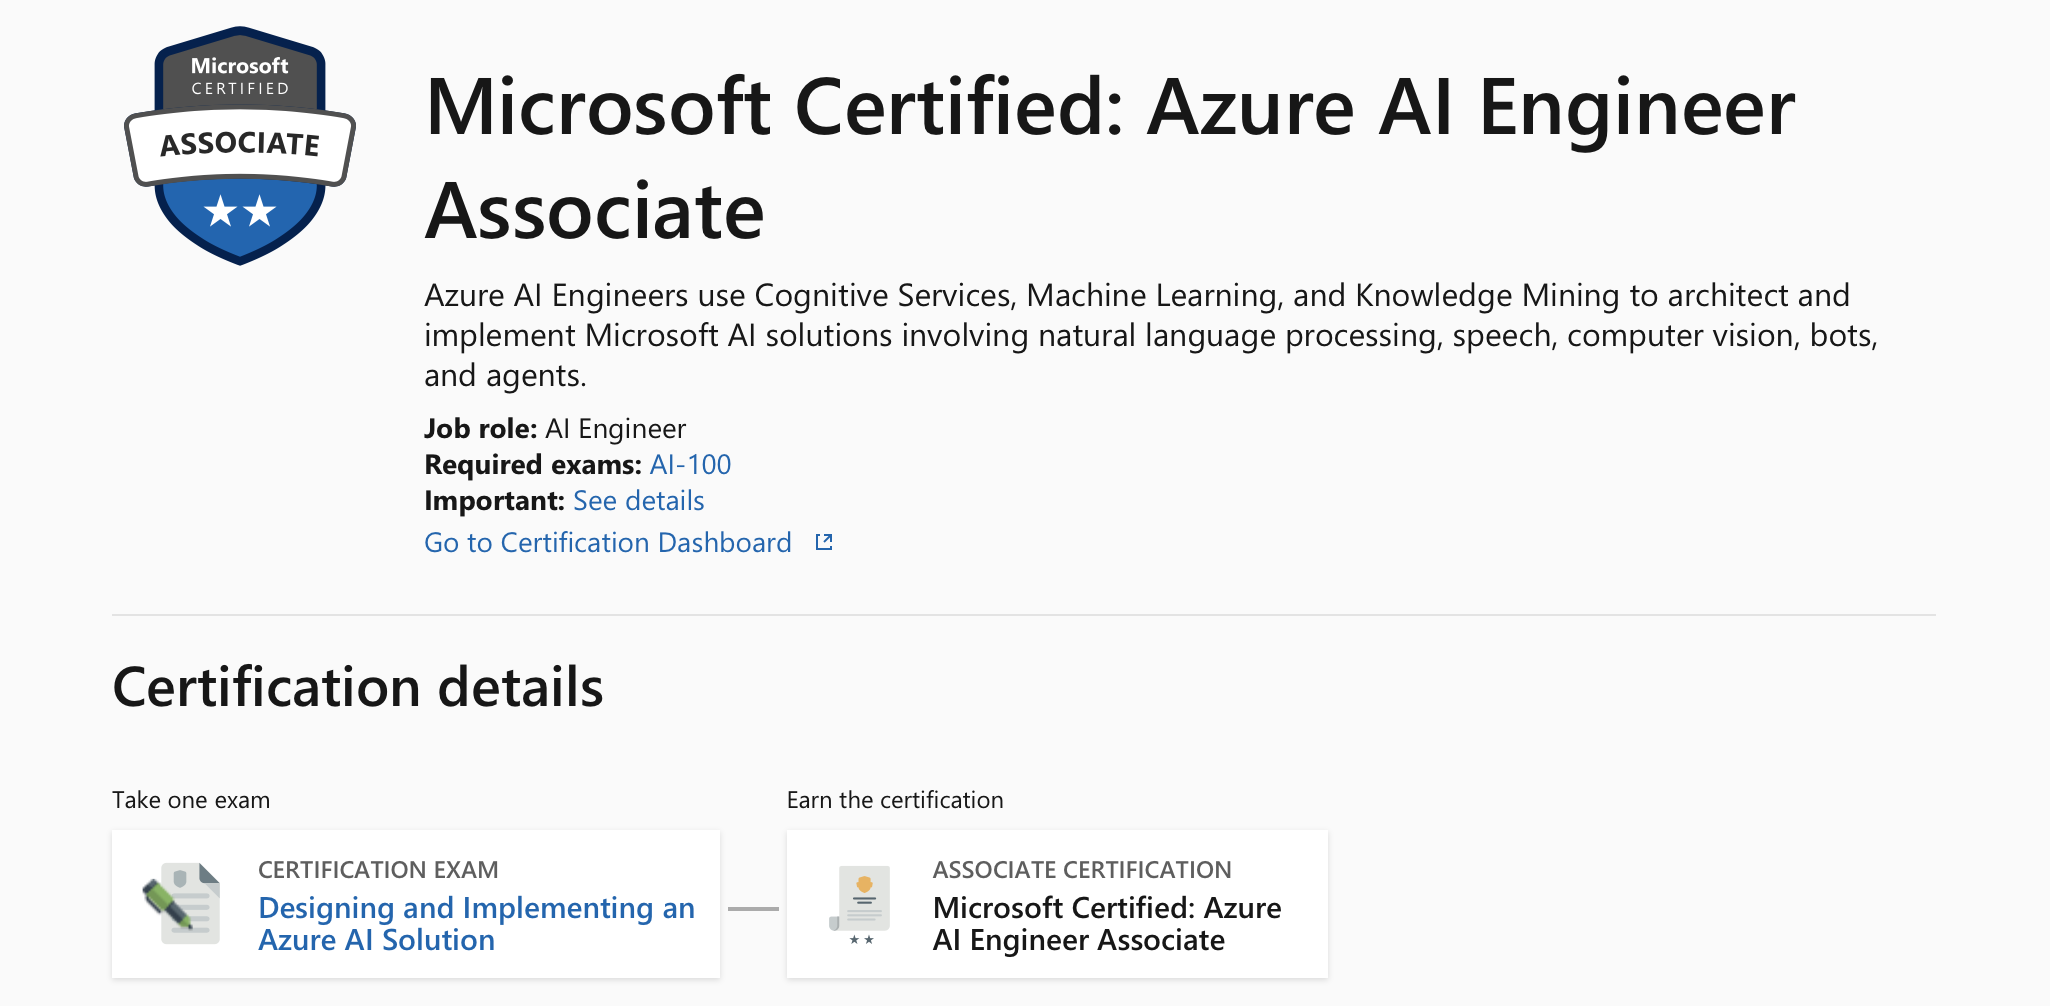 Azure AI Engineer Associate: Certificate from Microsoft  